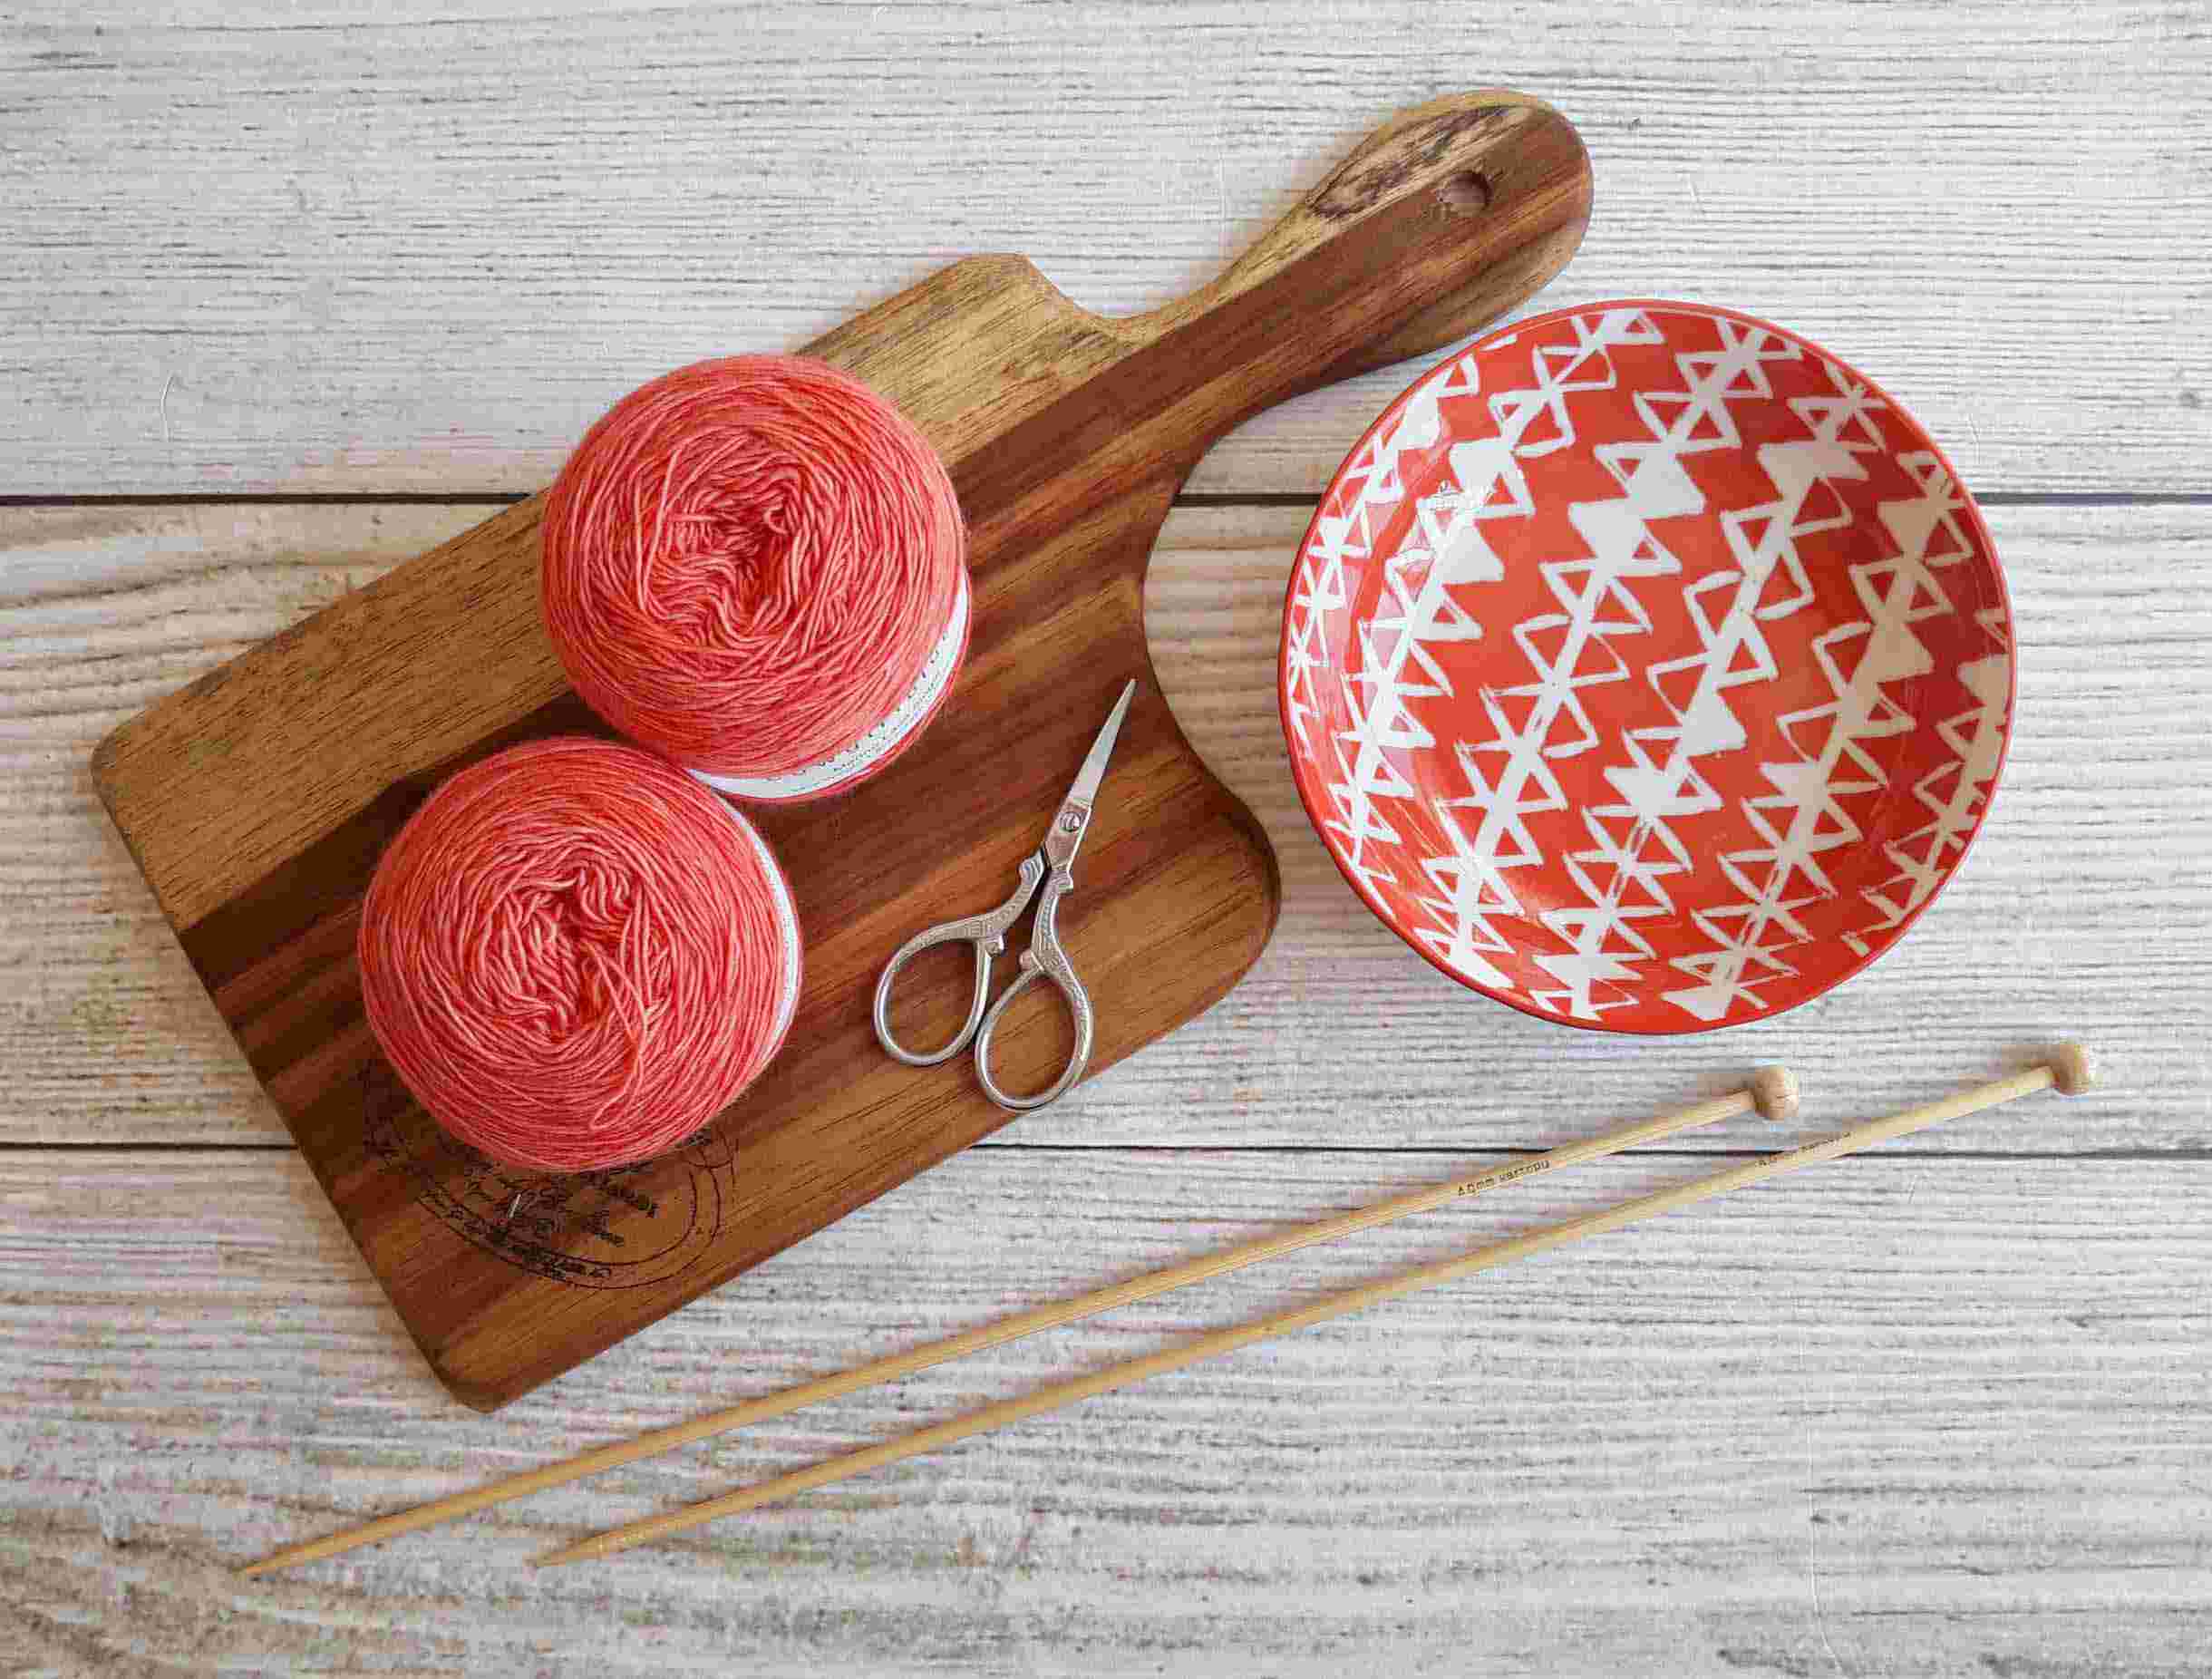 Image: Knitting supplies